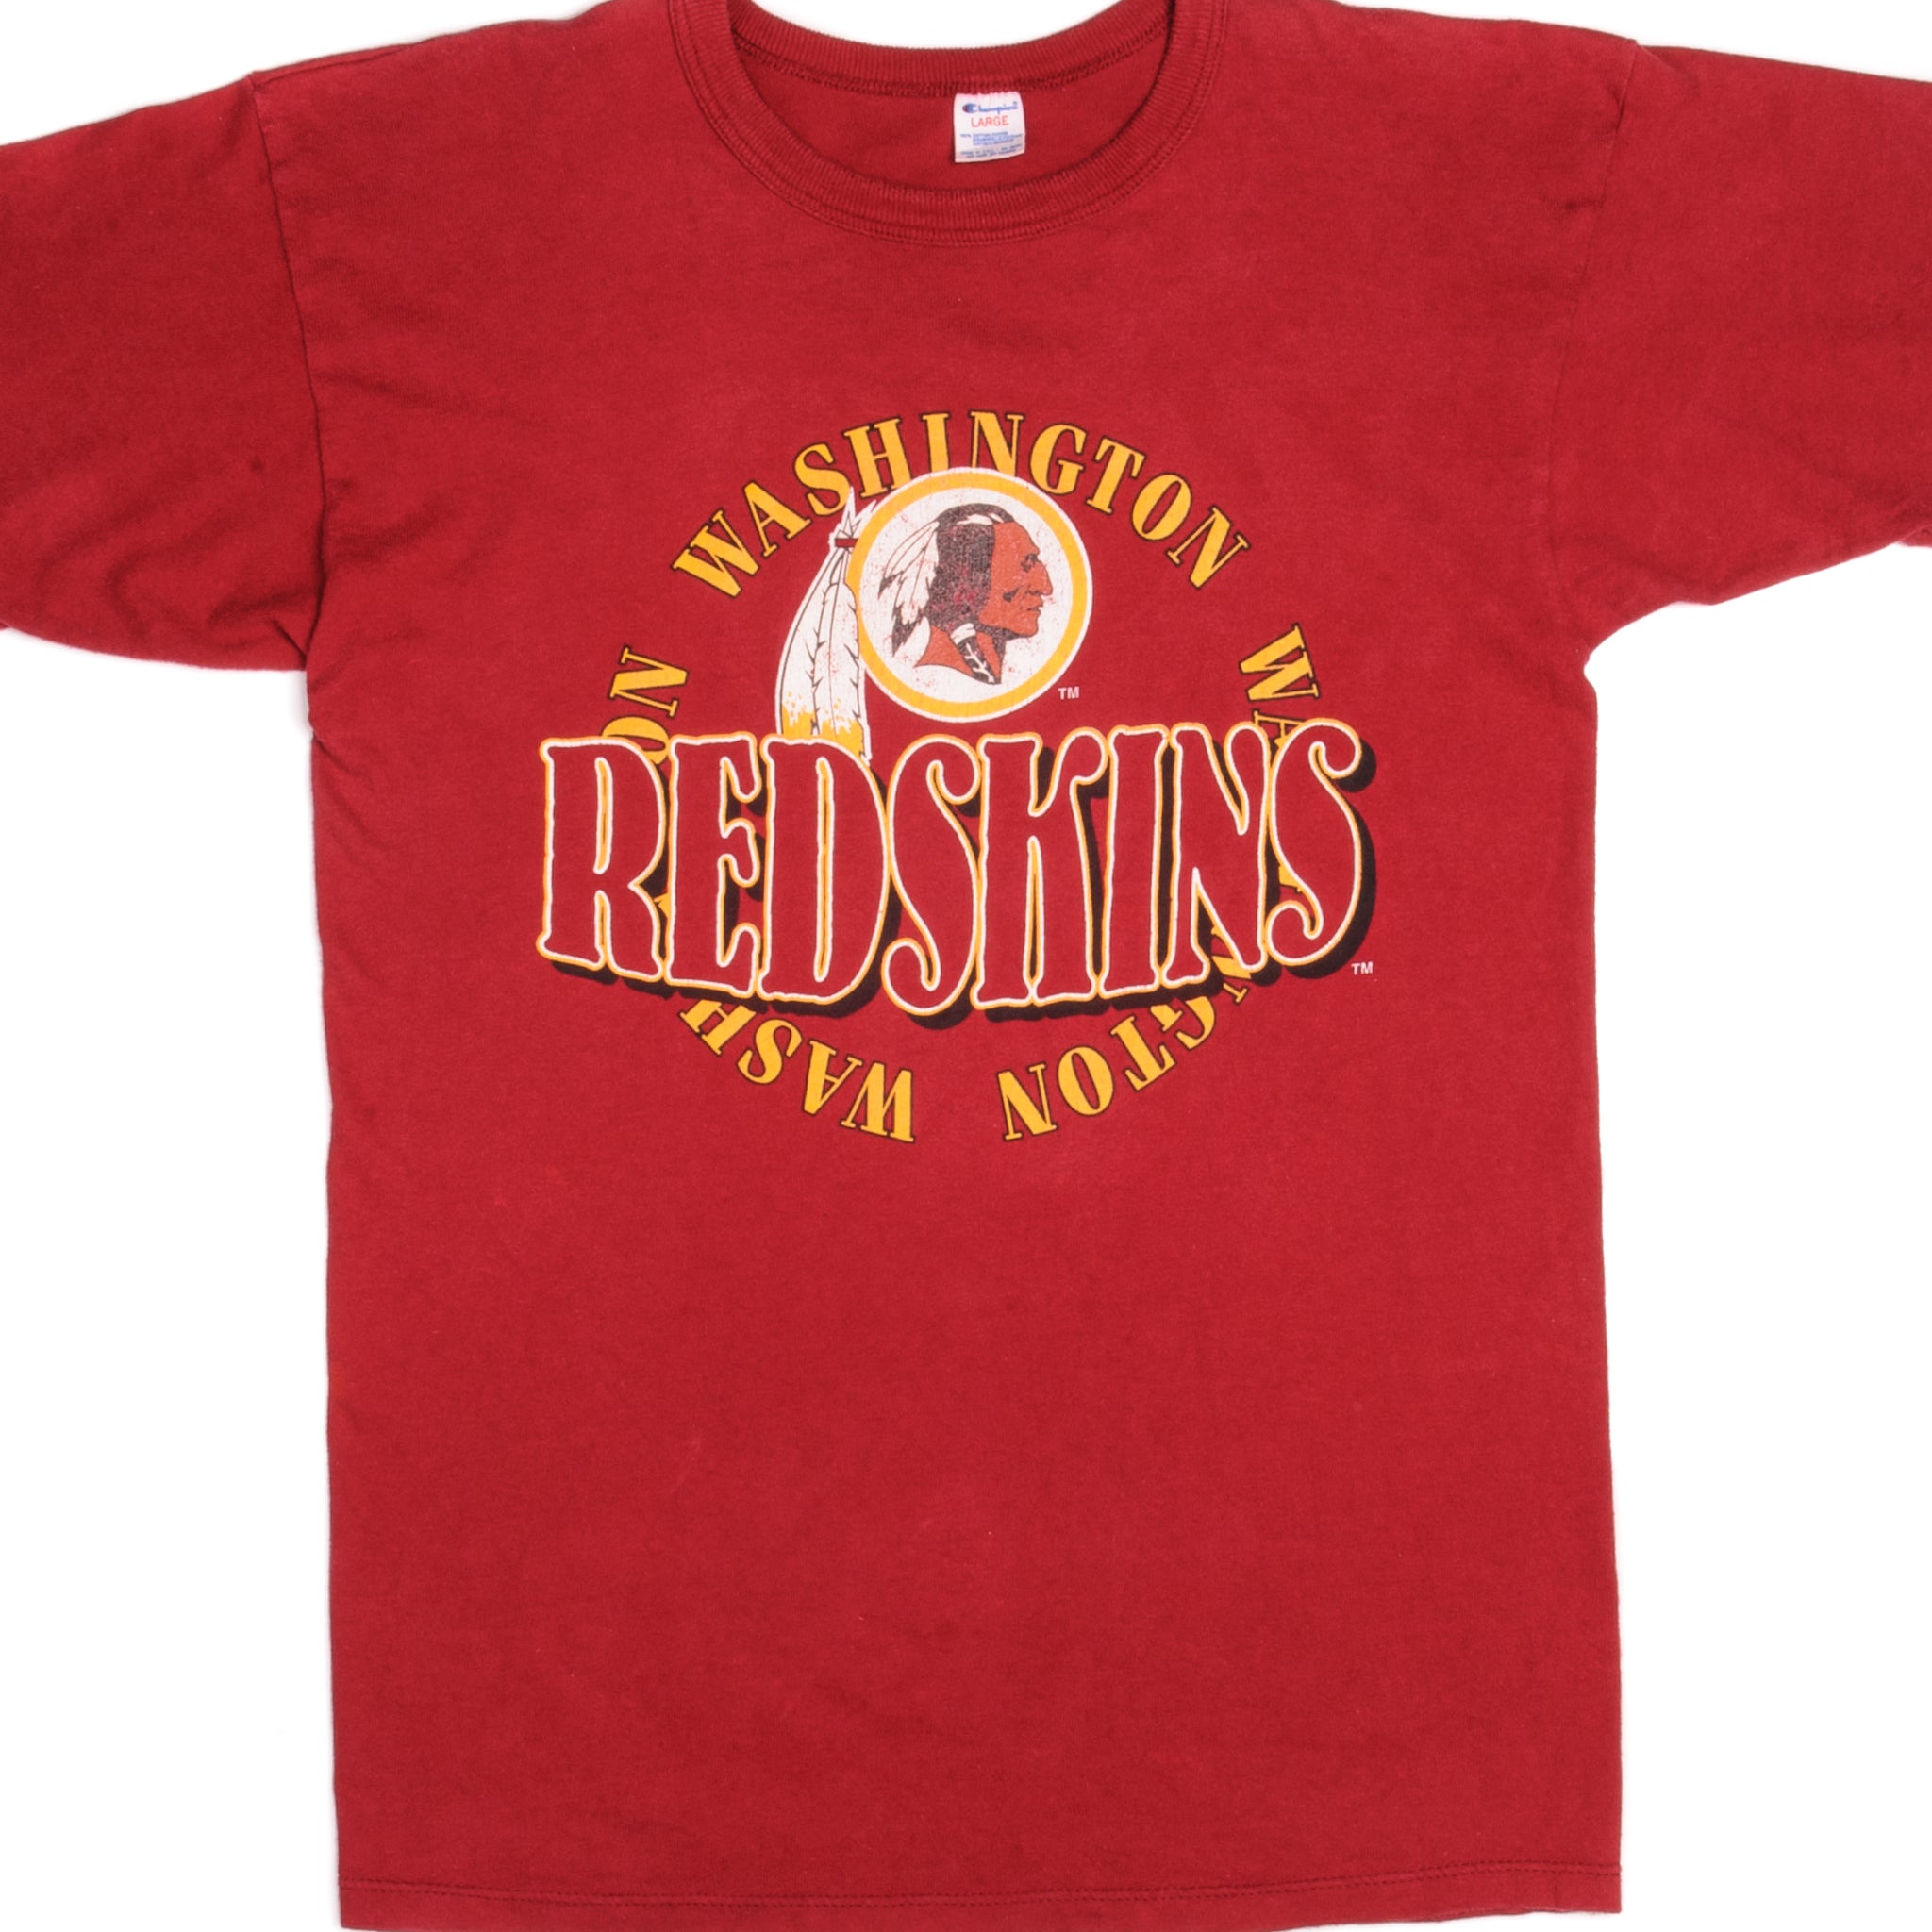 retro washington redskins t shirts